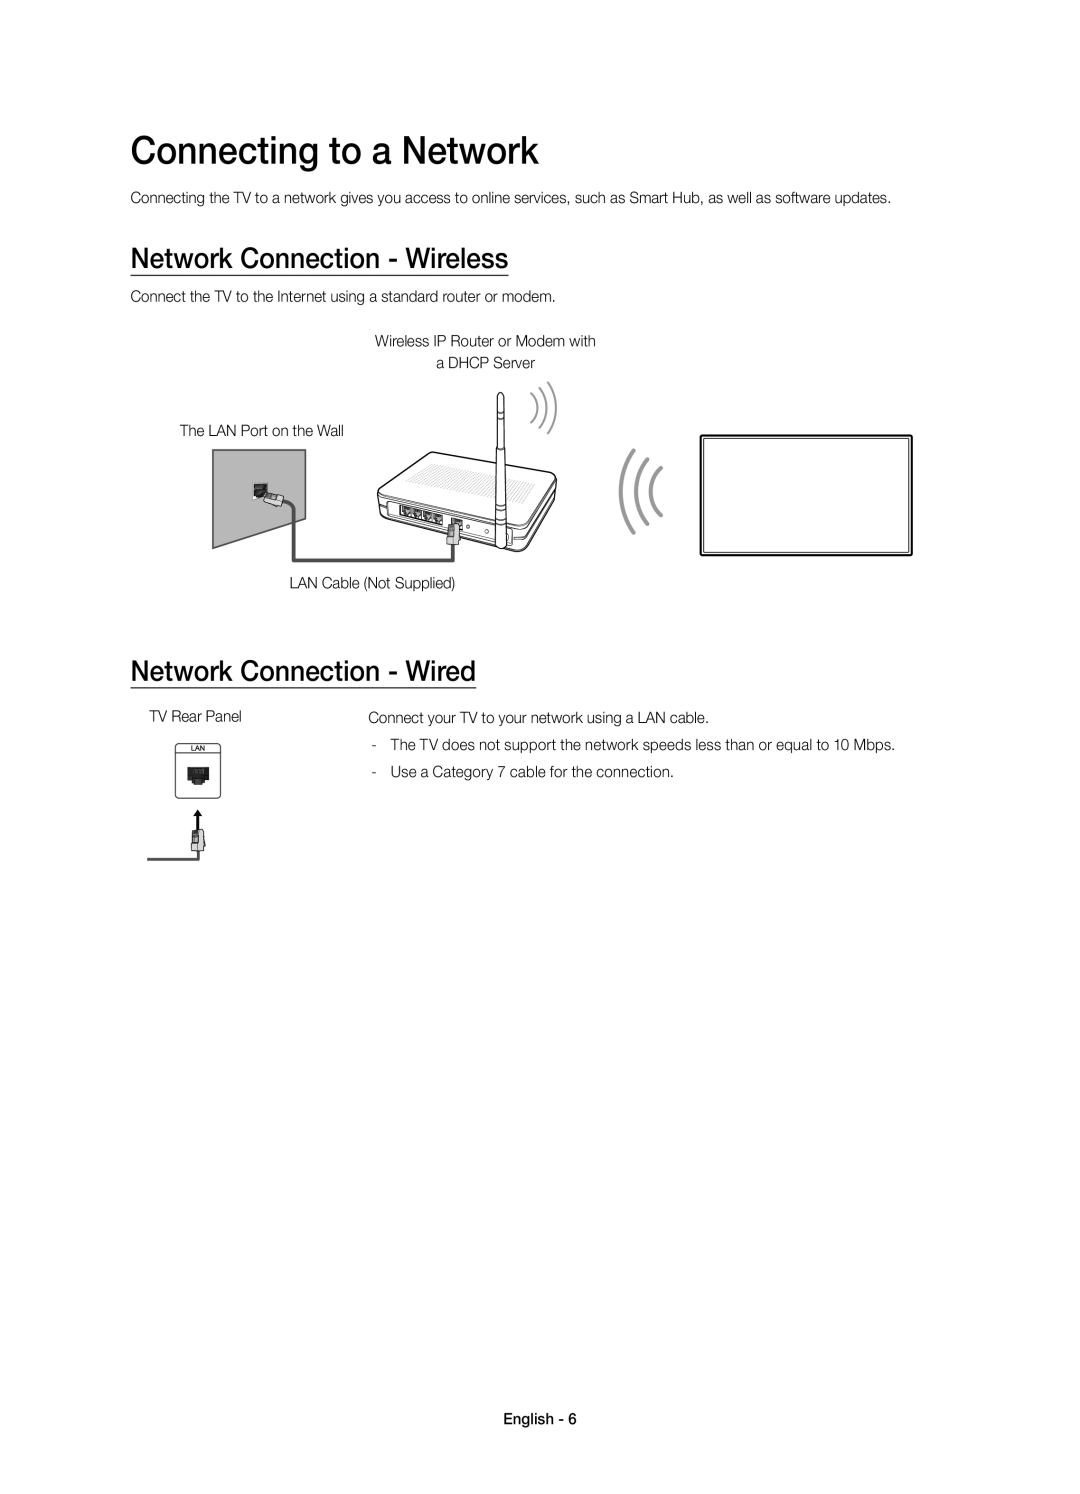 Samsung UE32J5550SUXZG, UE43J5670SUXZG Connecting to a Network, Network Connection - Wireless, Network Connection - Wired 